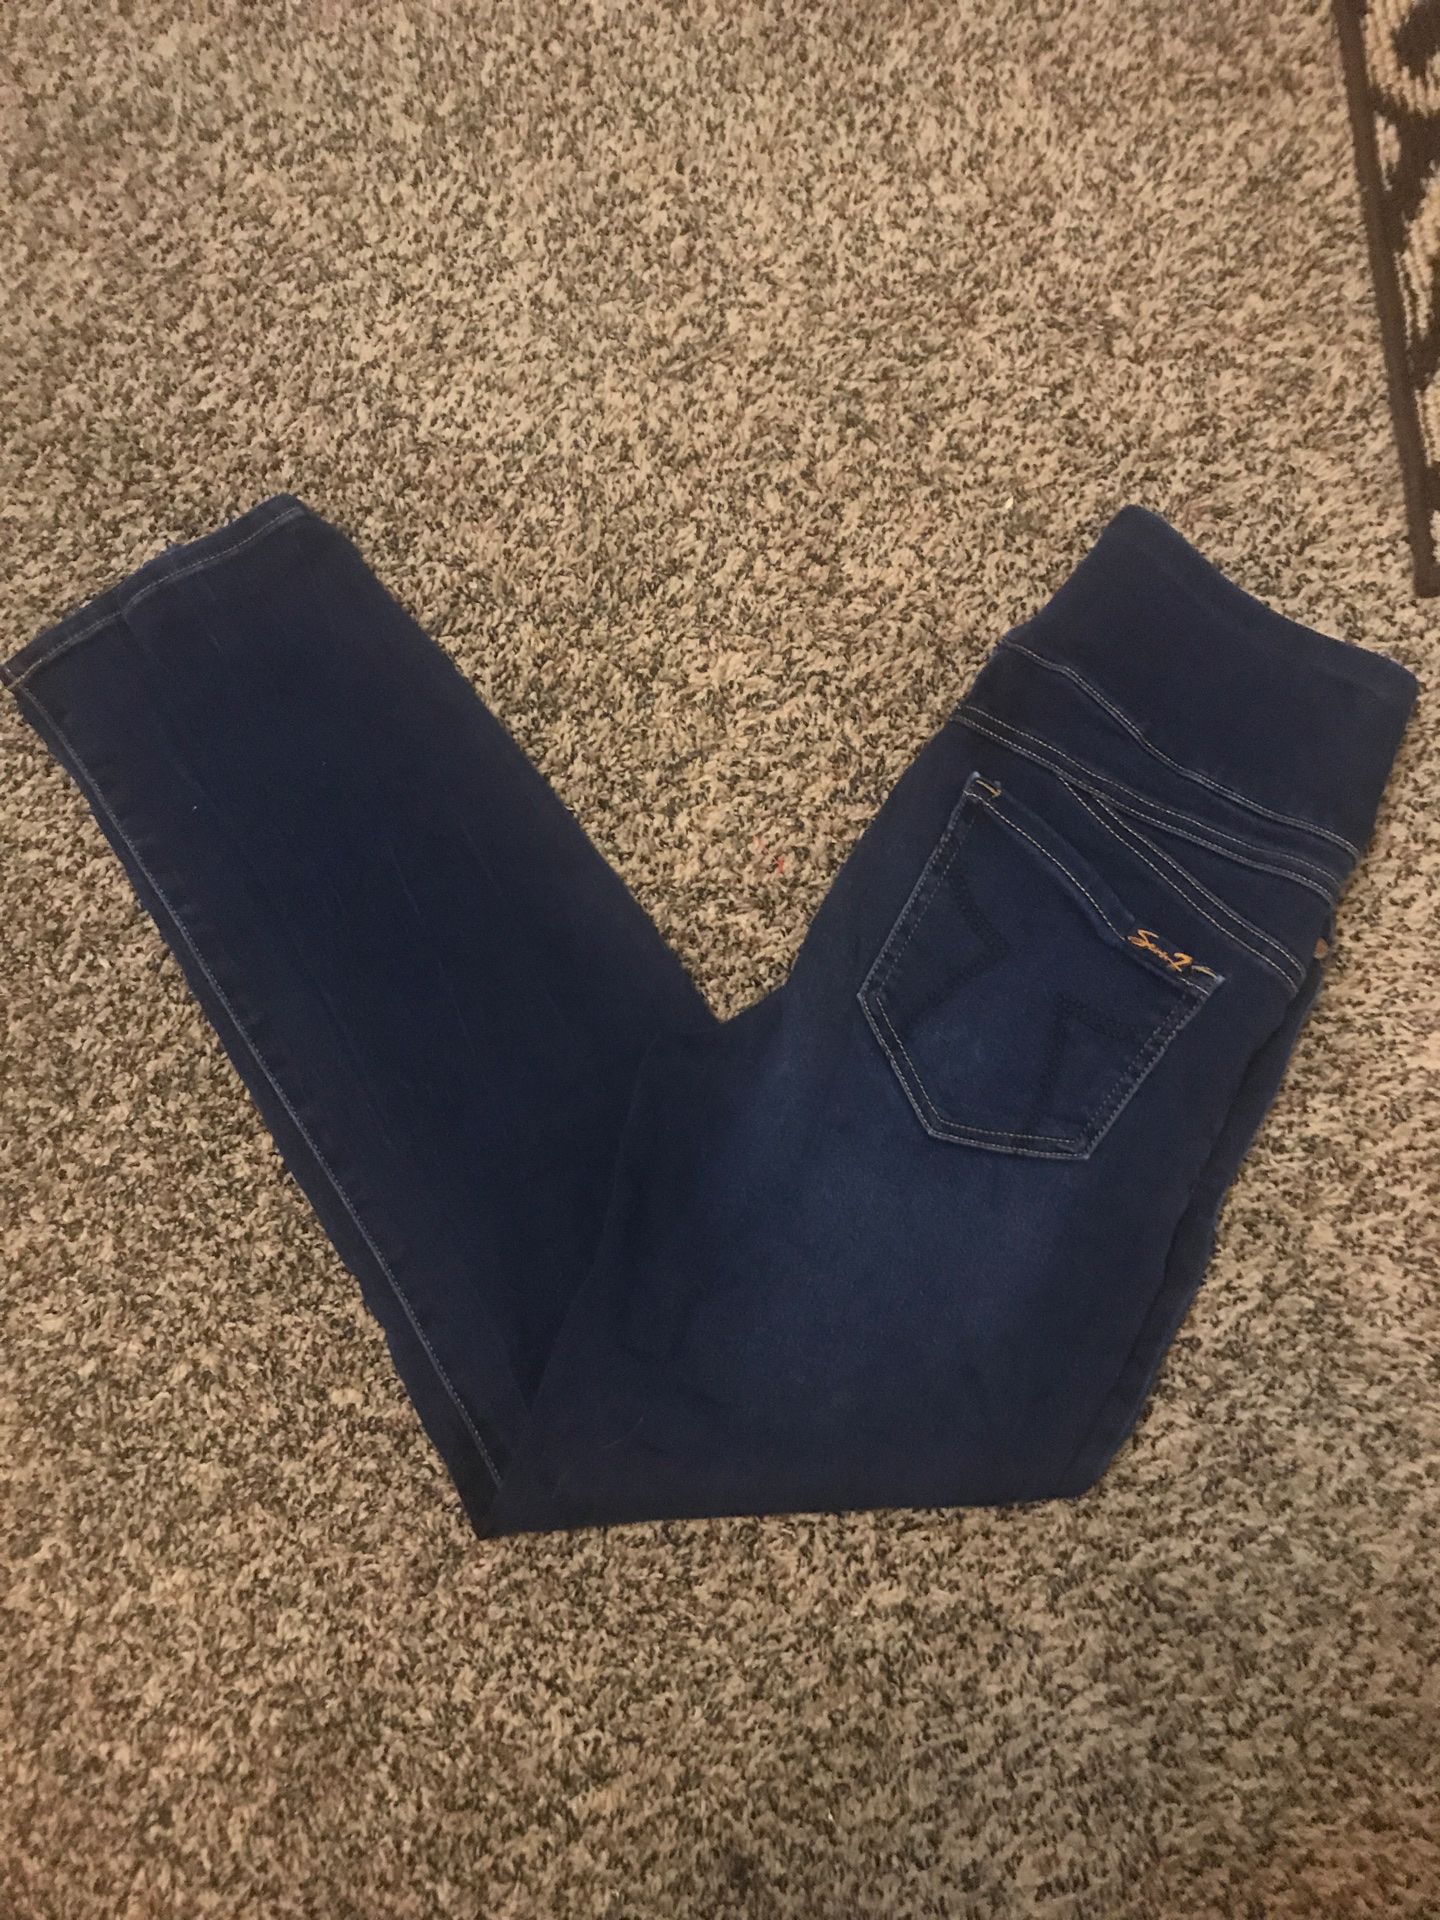 SEVEN Maternity jeans Pants Size 8